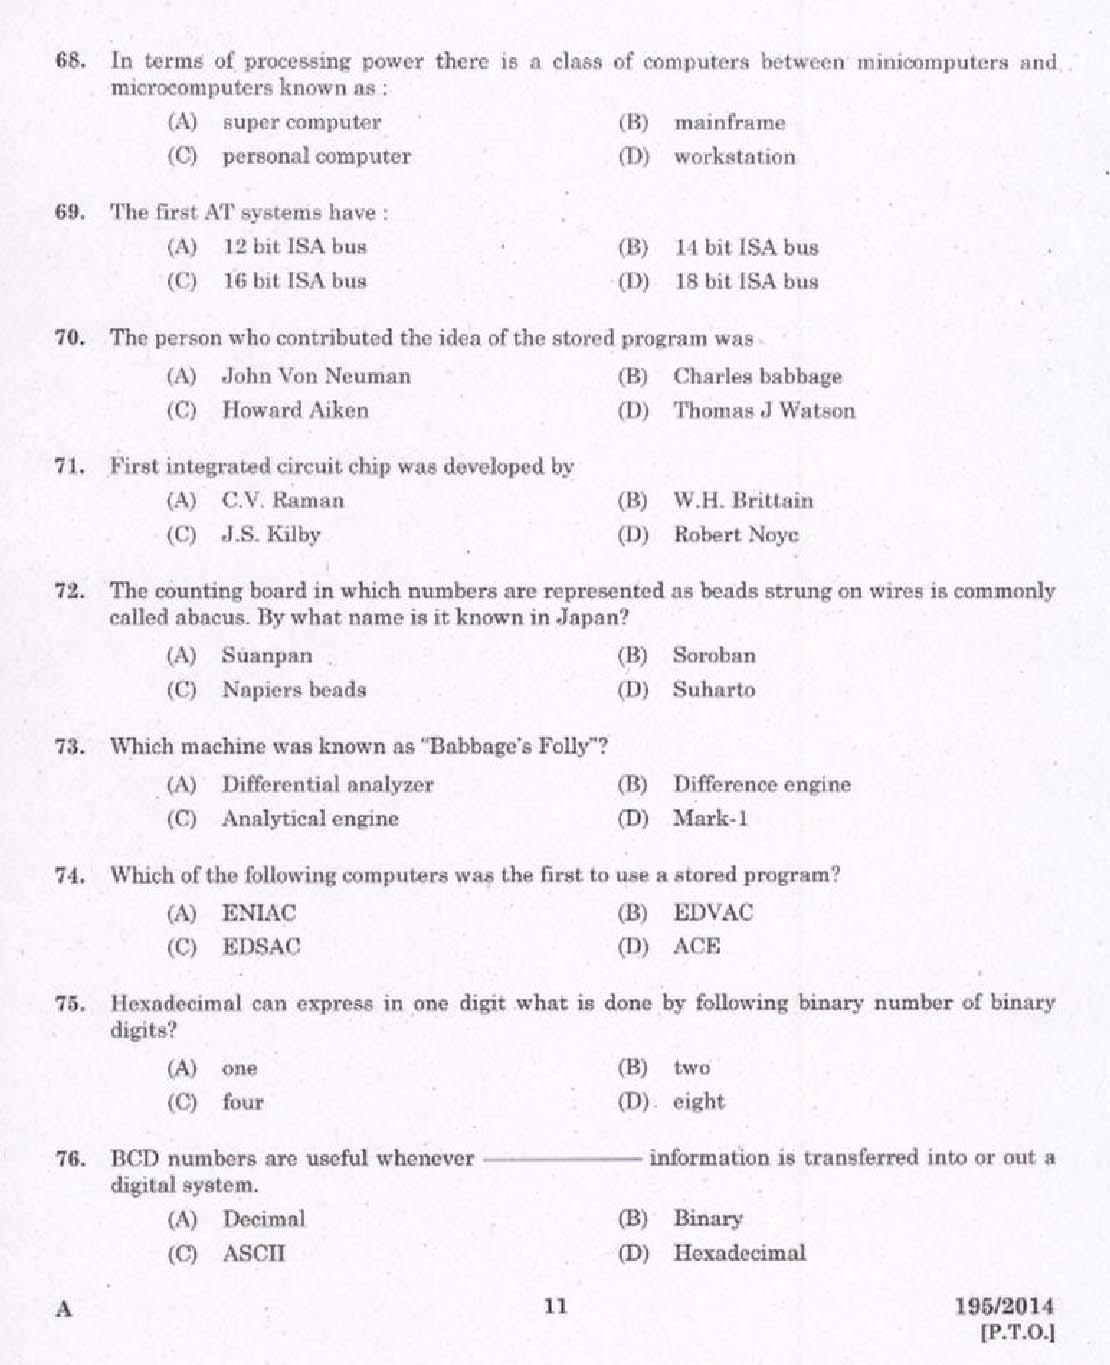 Kerala PSC Computer Programmer Exam 2014 Question Paper Code 1952014 9